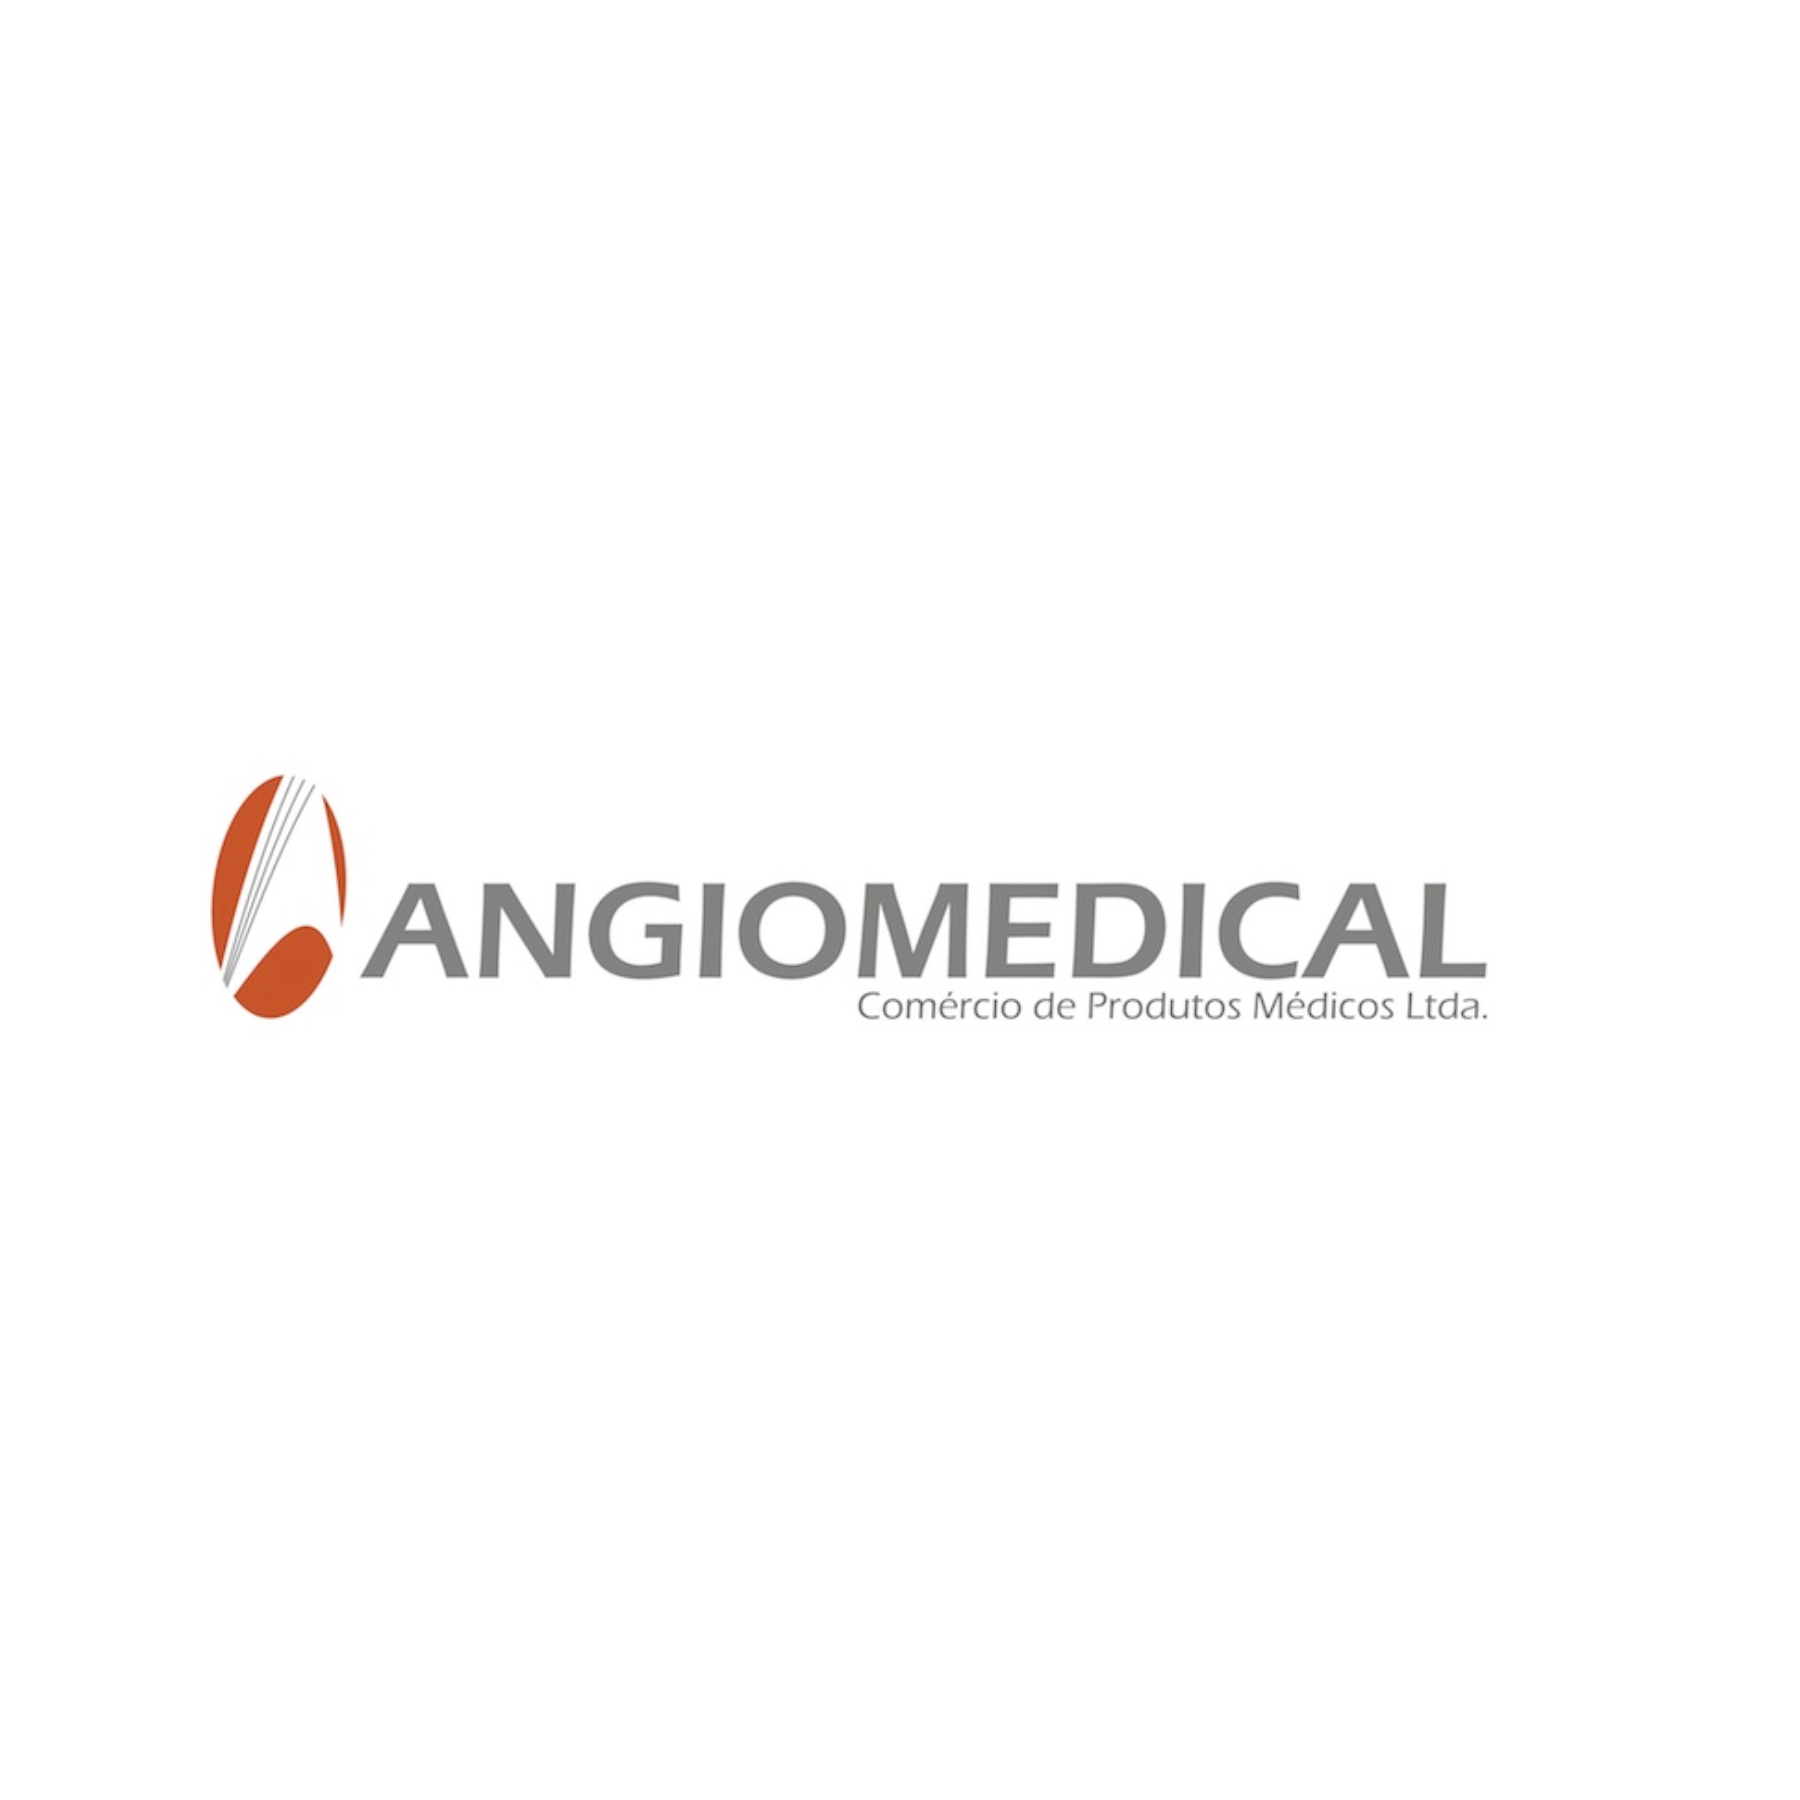 Angiomedical